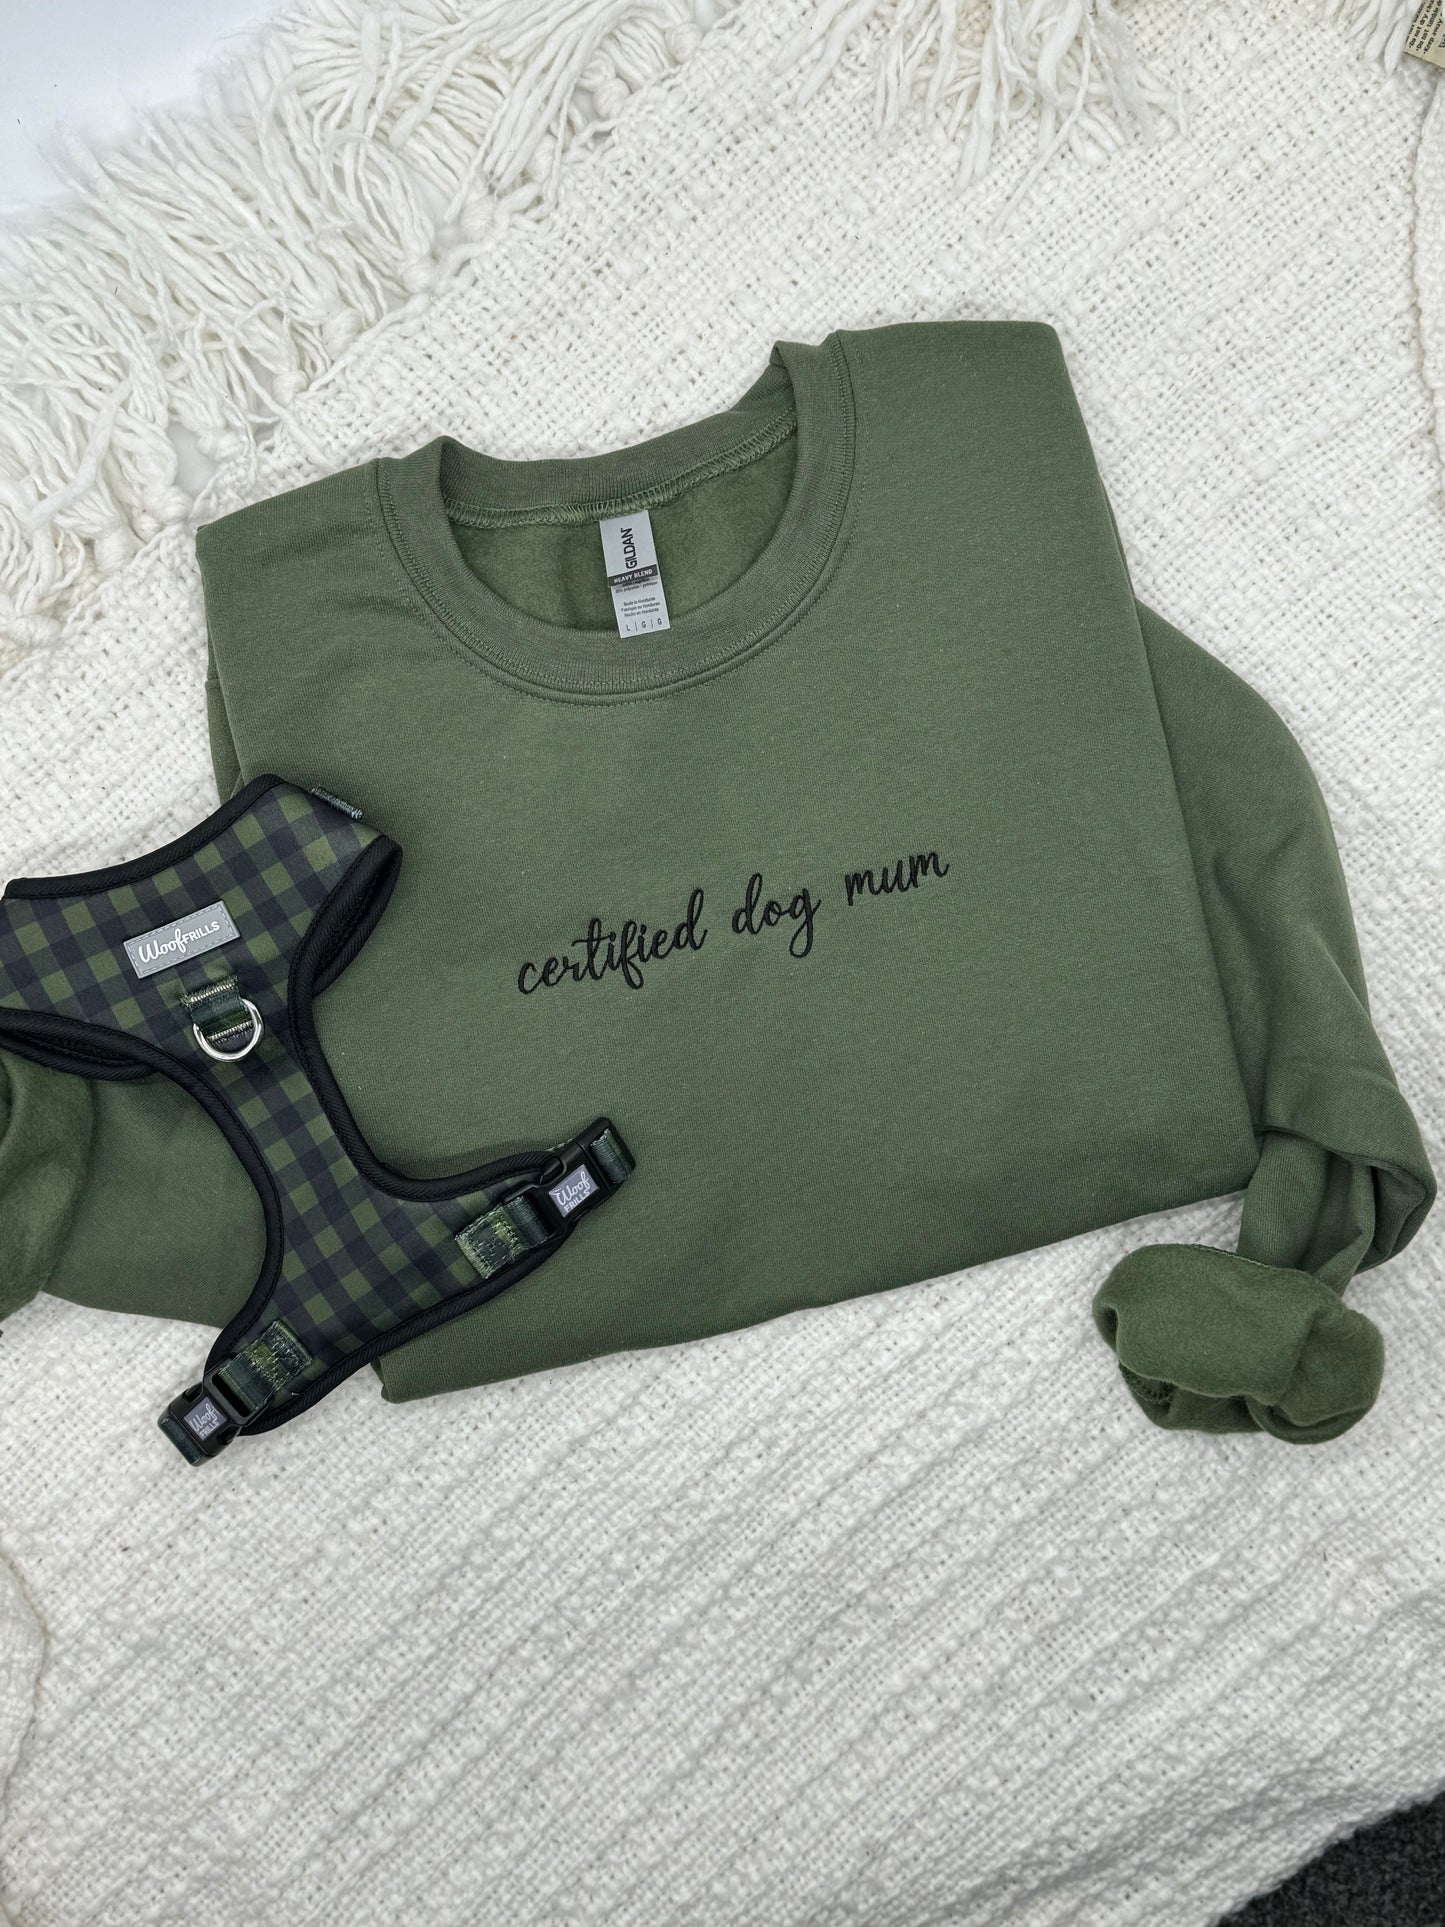 Certified dog dad | Embroidered Hoodie & Sweatshirt